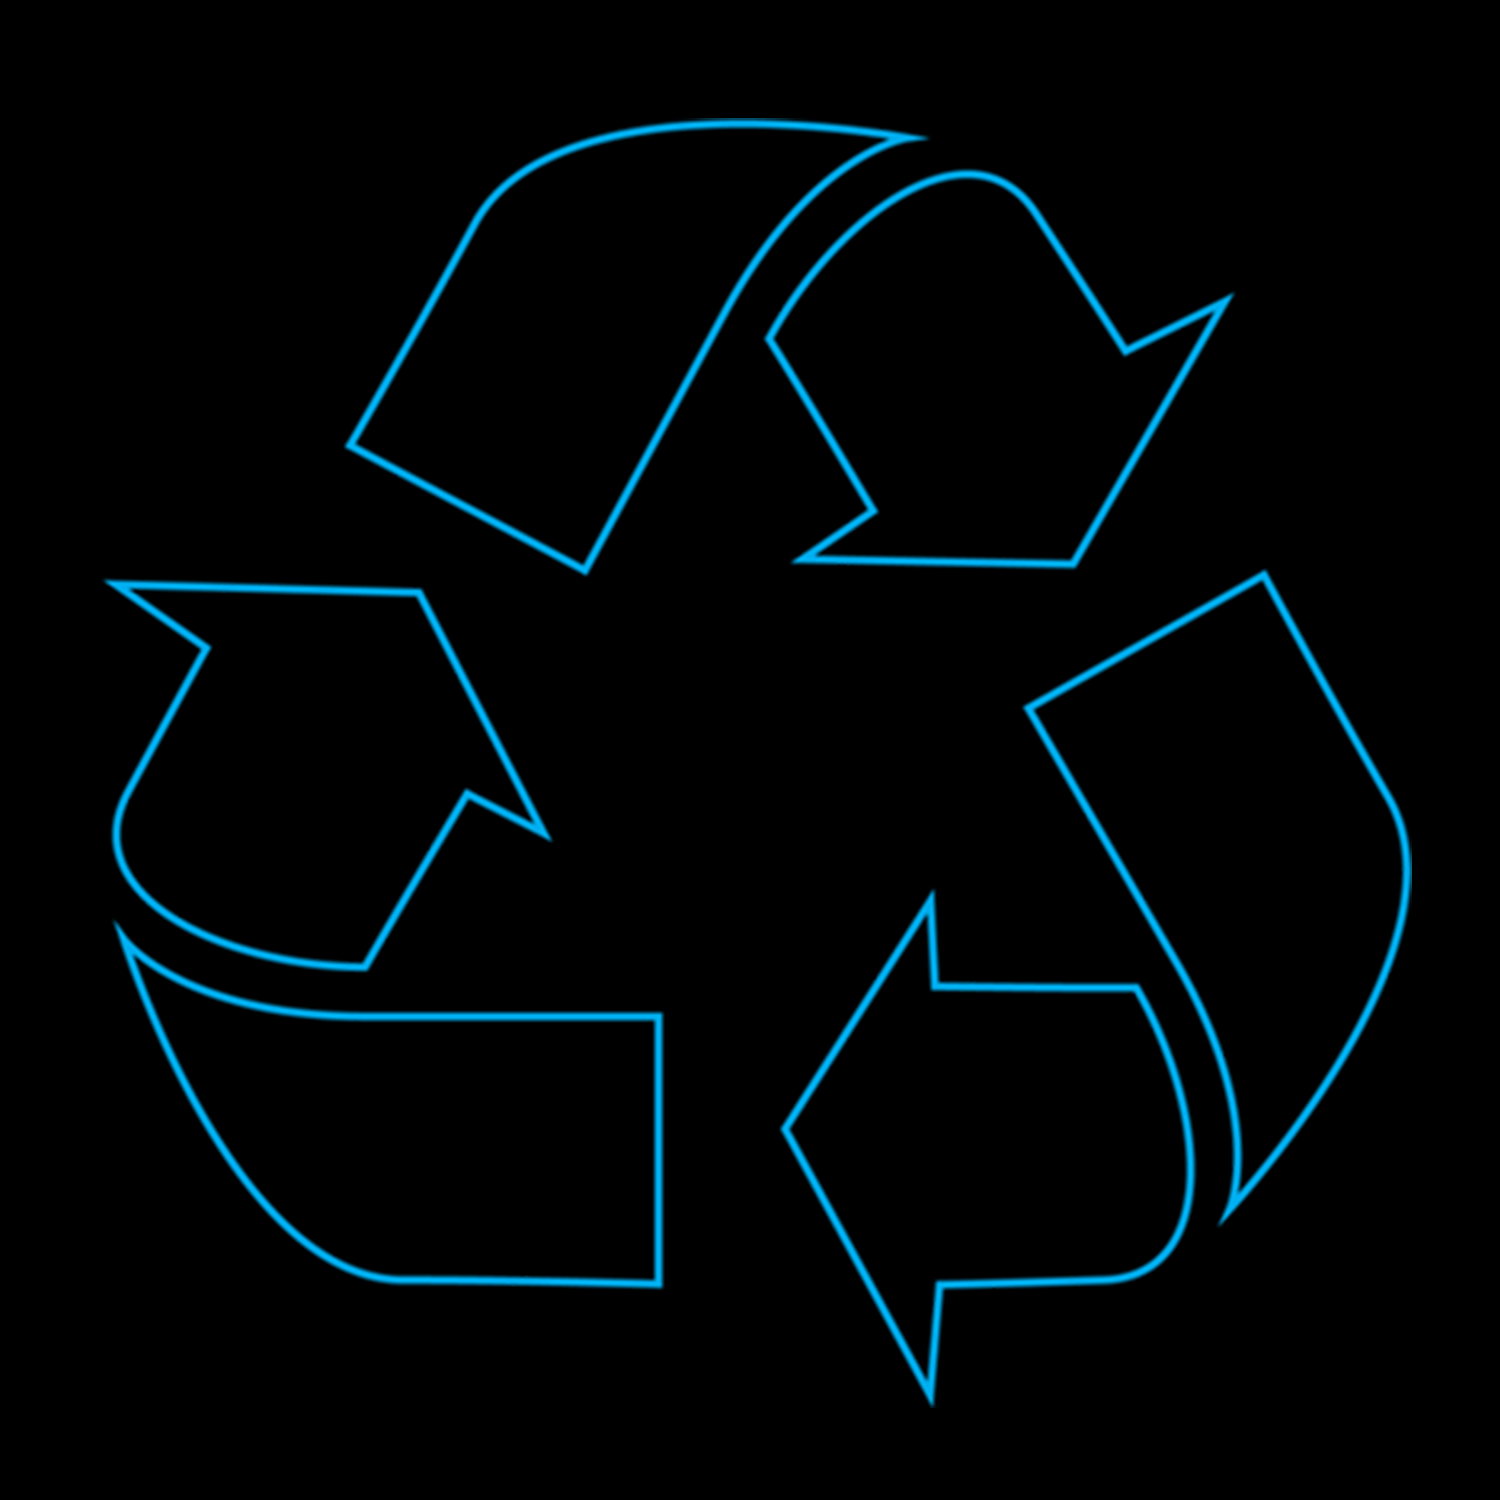 Alpha340-recycling-symbol.png